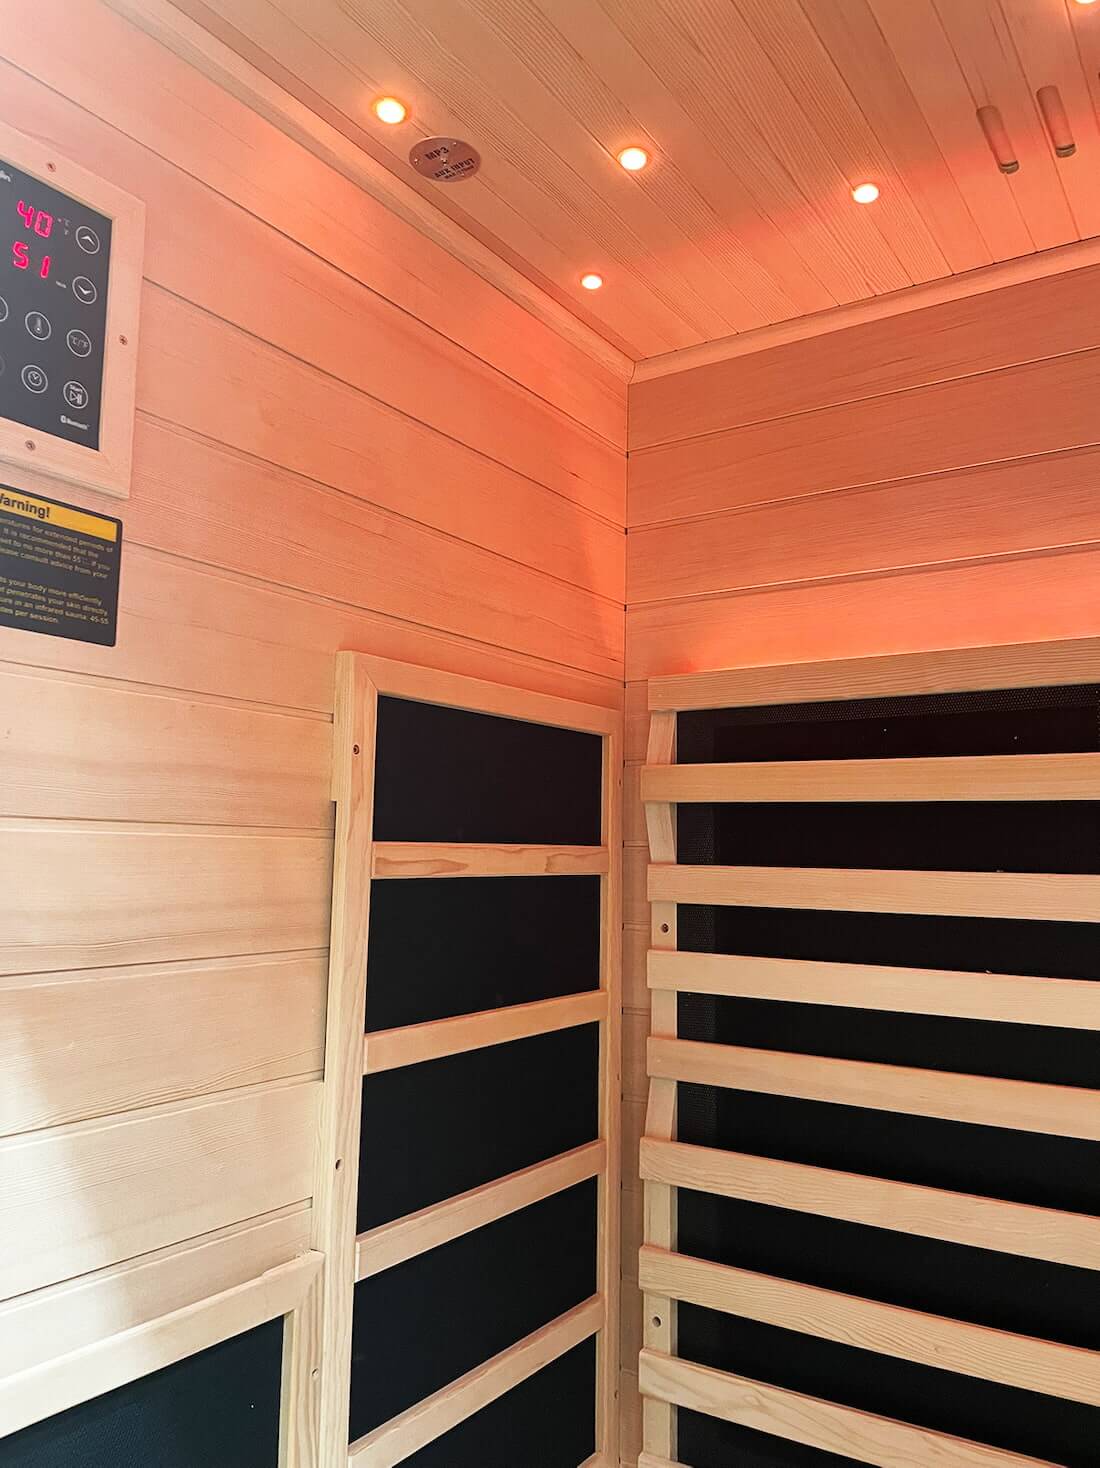 Kylin KY-2Q5 2 person infrared sauna